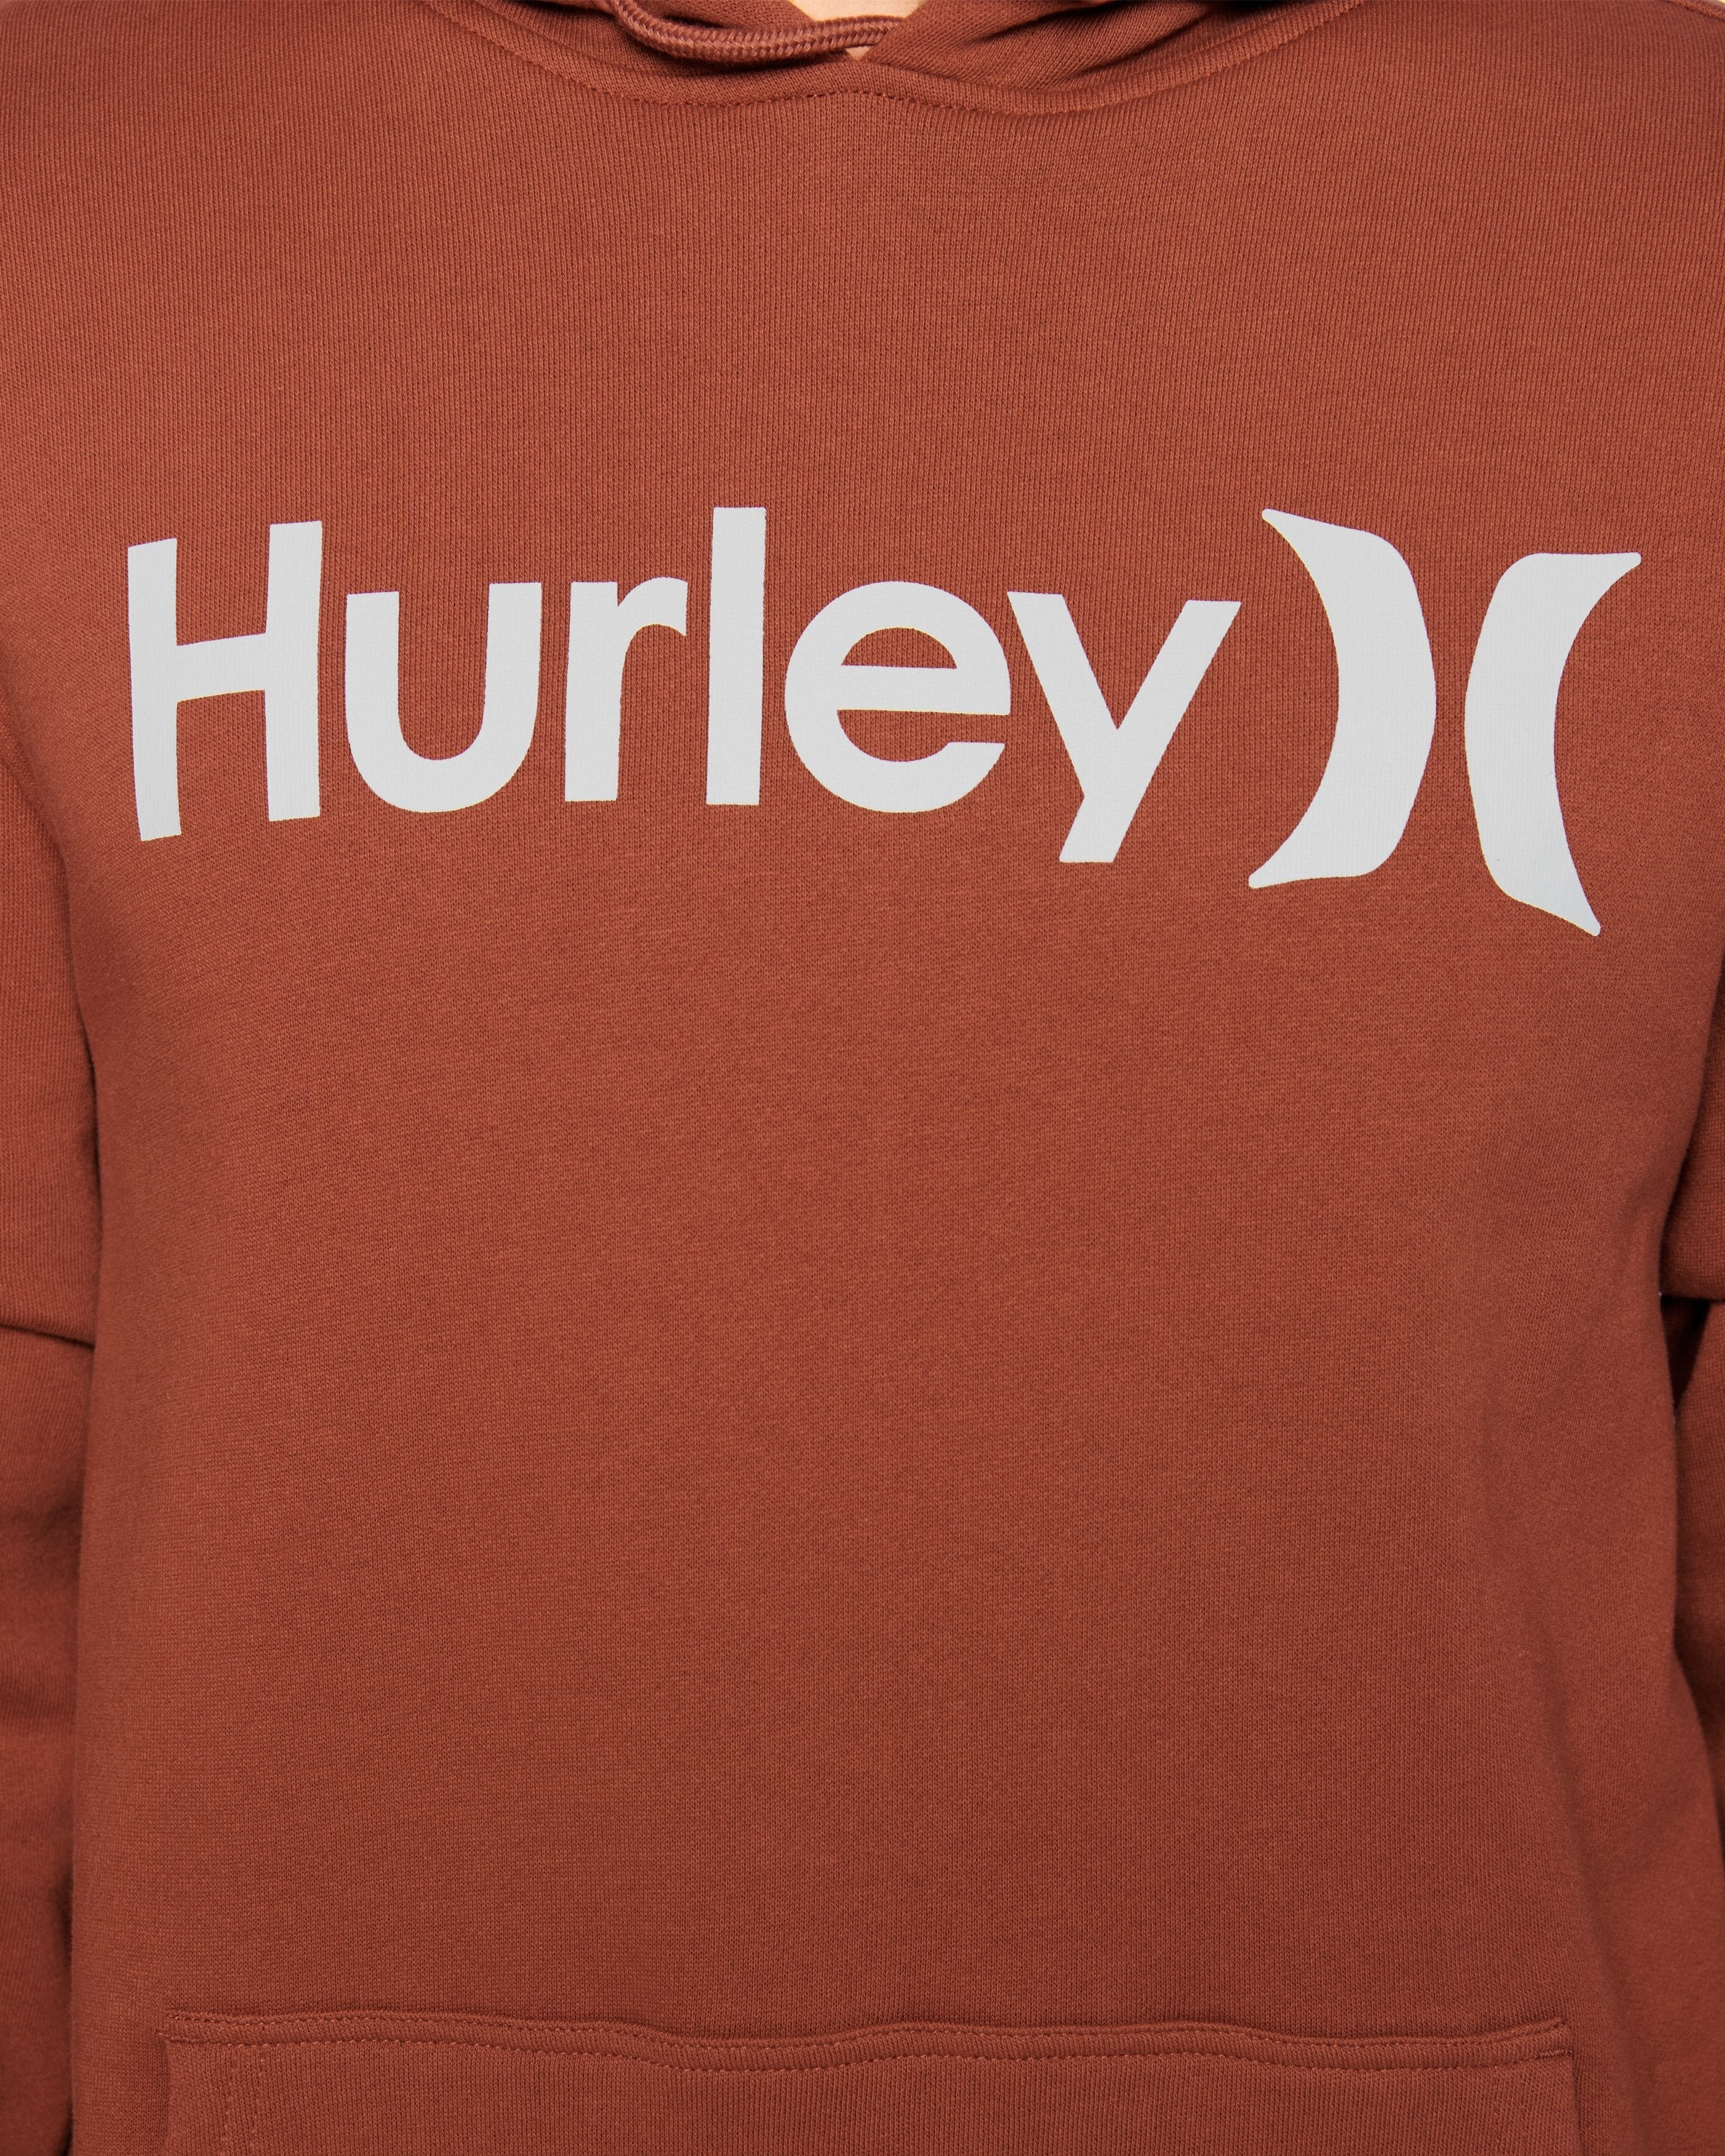 Hurley OAO Solid Summer Pullover Hoodie.